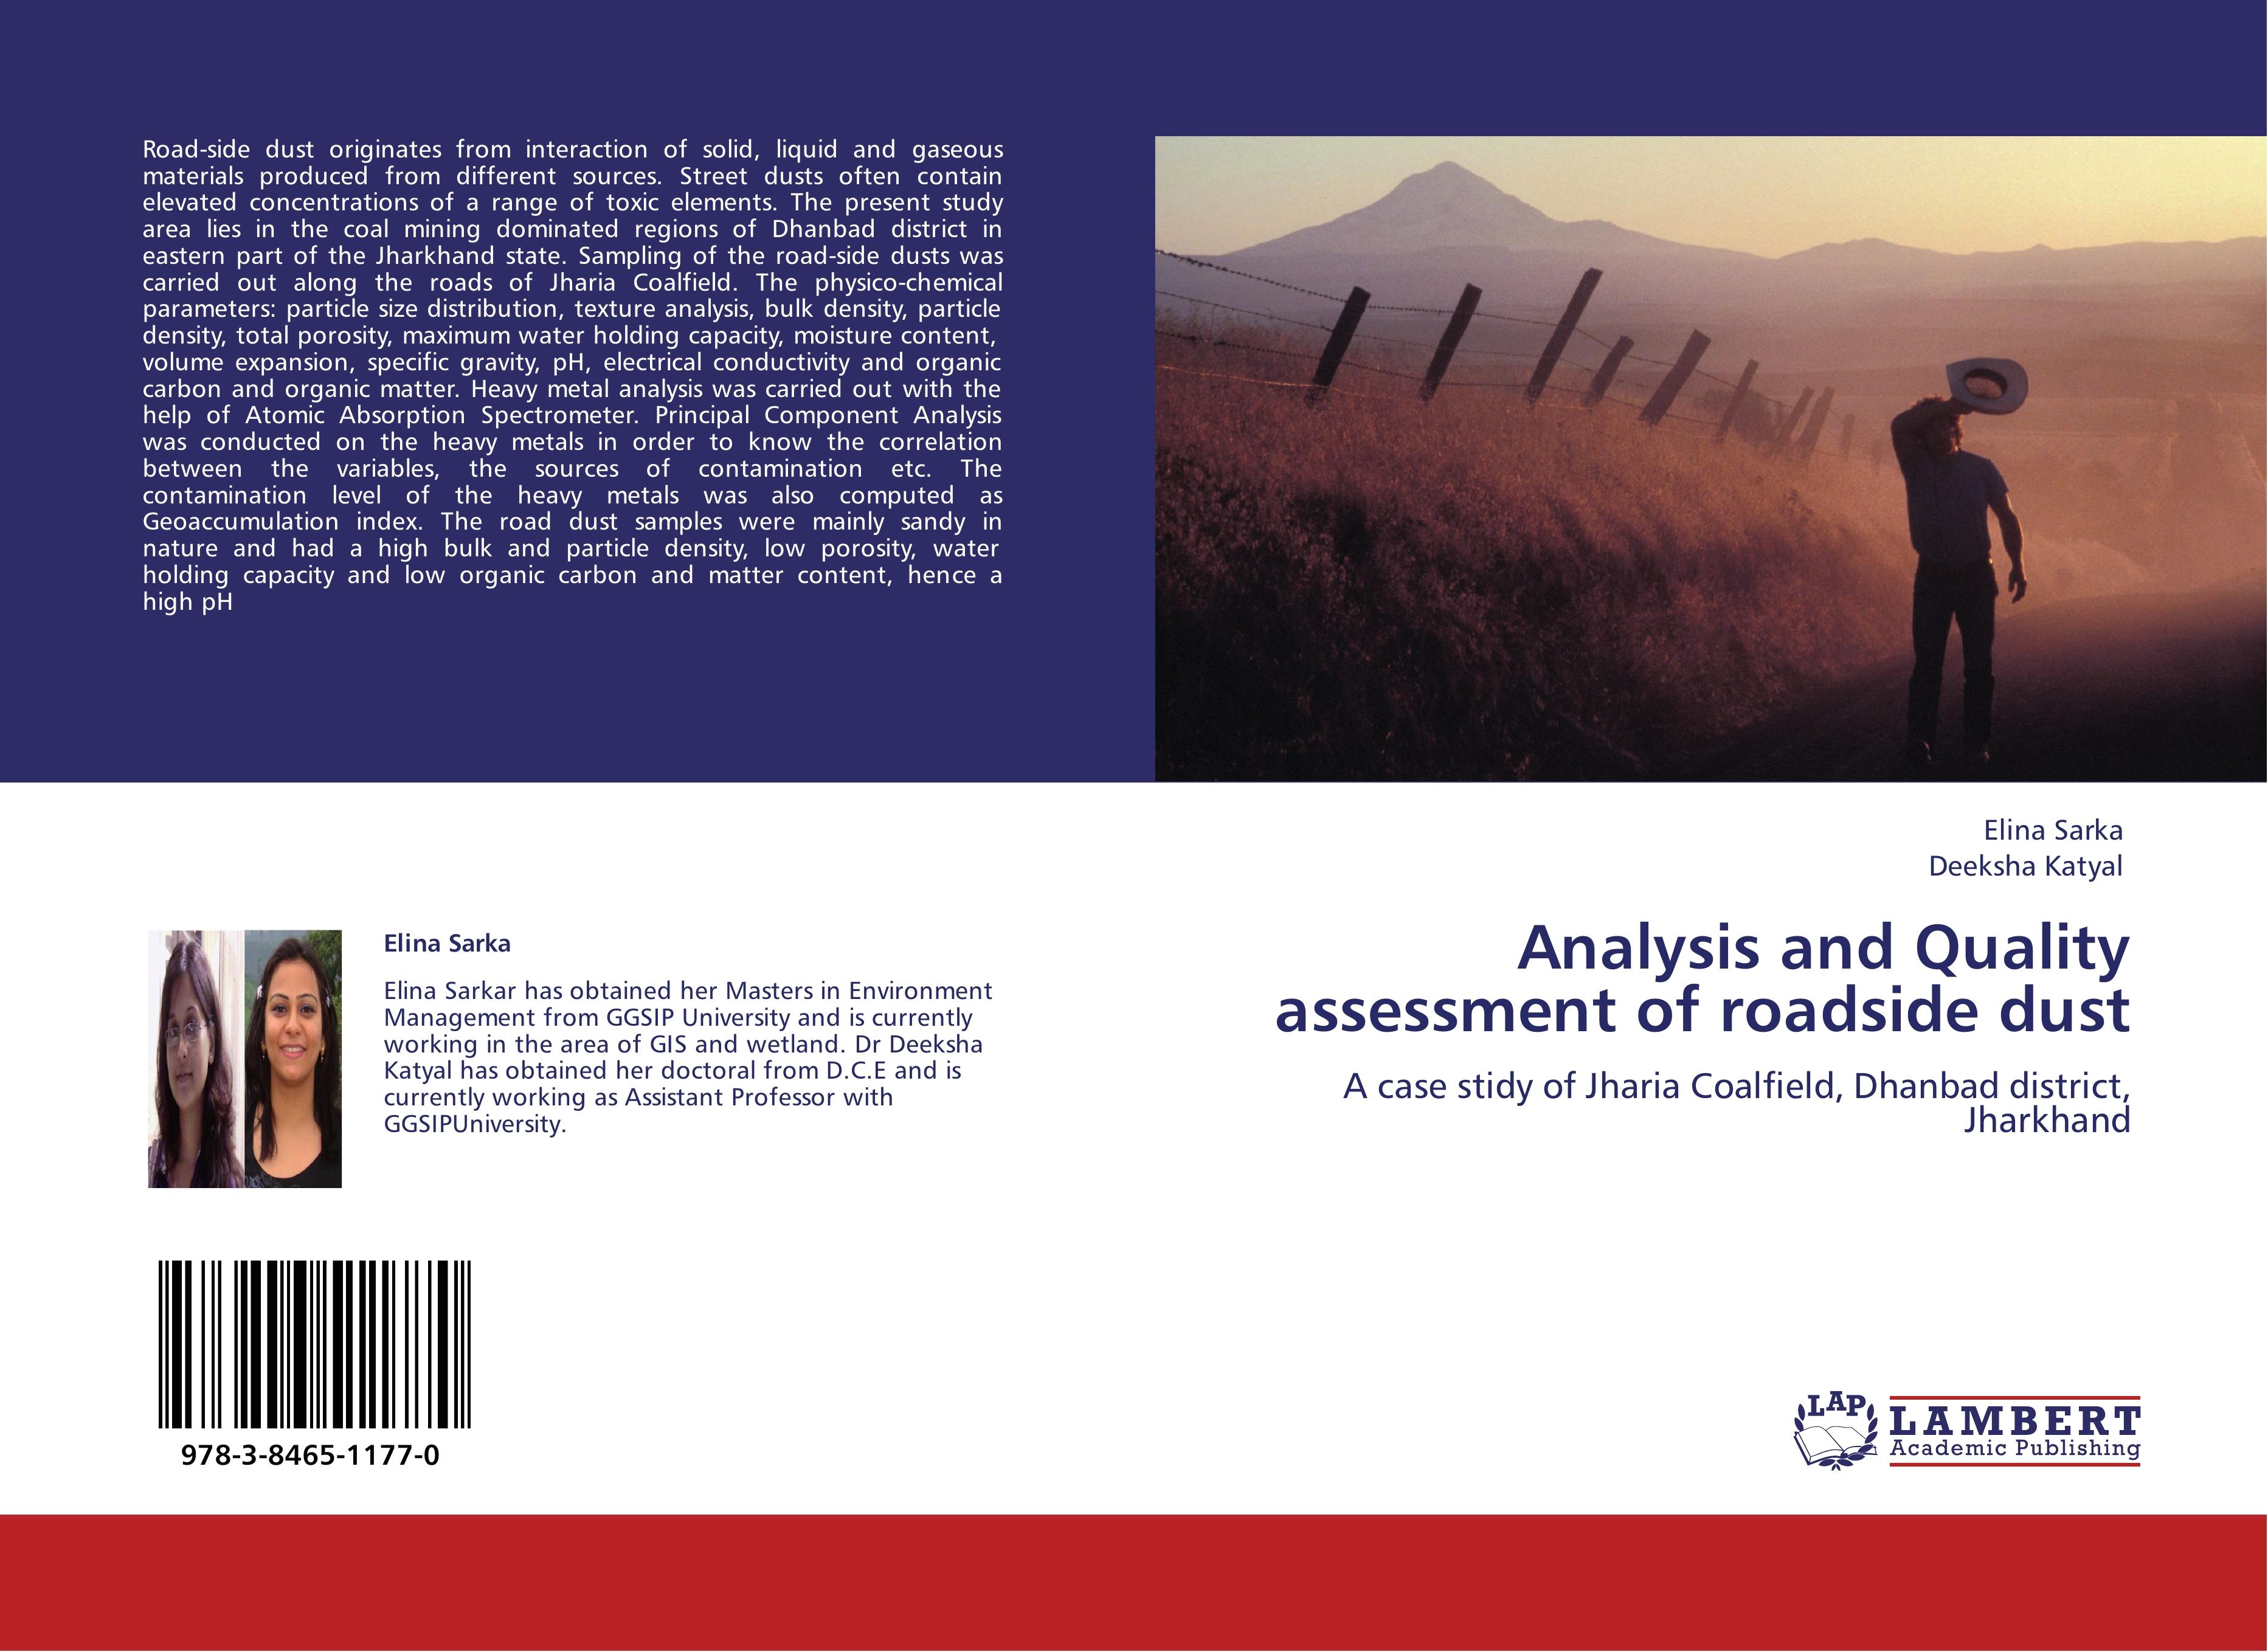 Analysis and Quality assessment of roadside dust - Elina Sarka Deeksha Katyal